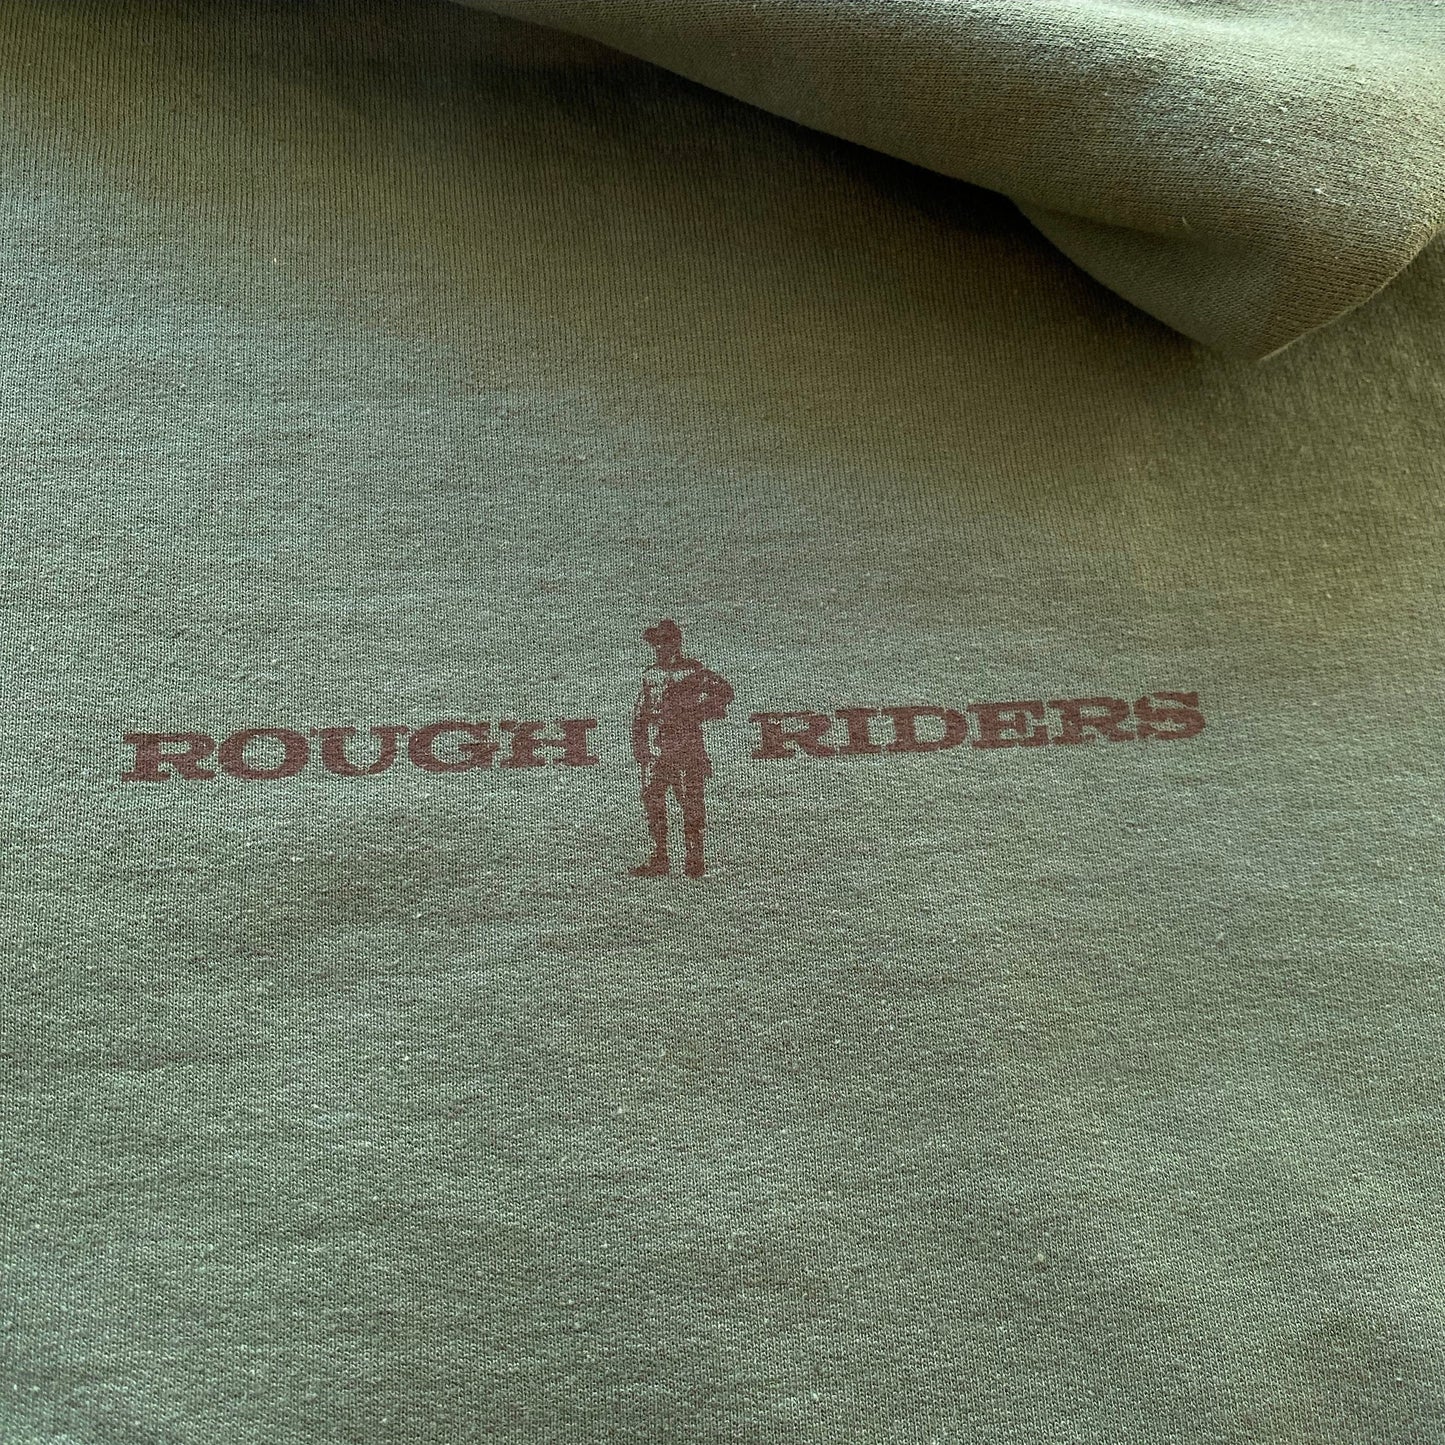 Teddy Roosevelt "Rough Riders" Hooded sweatshirt